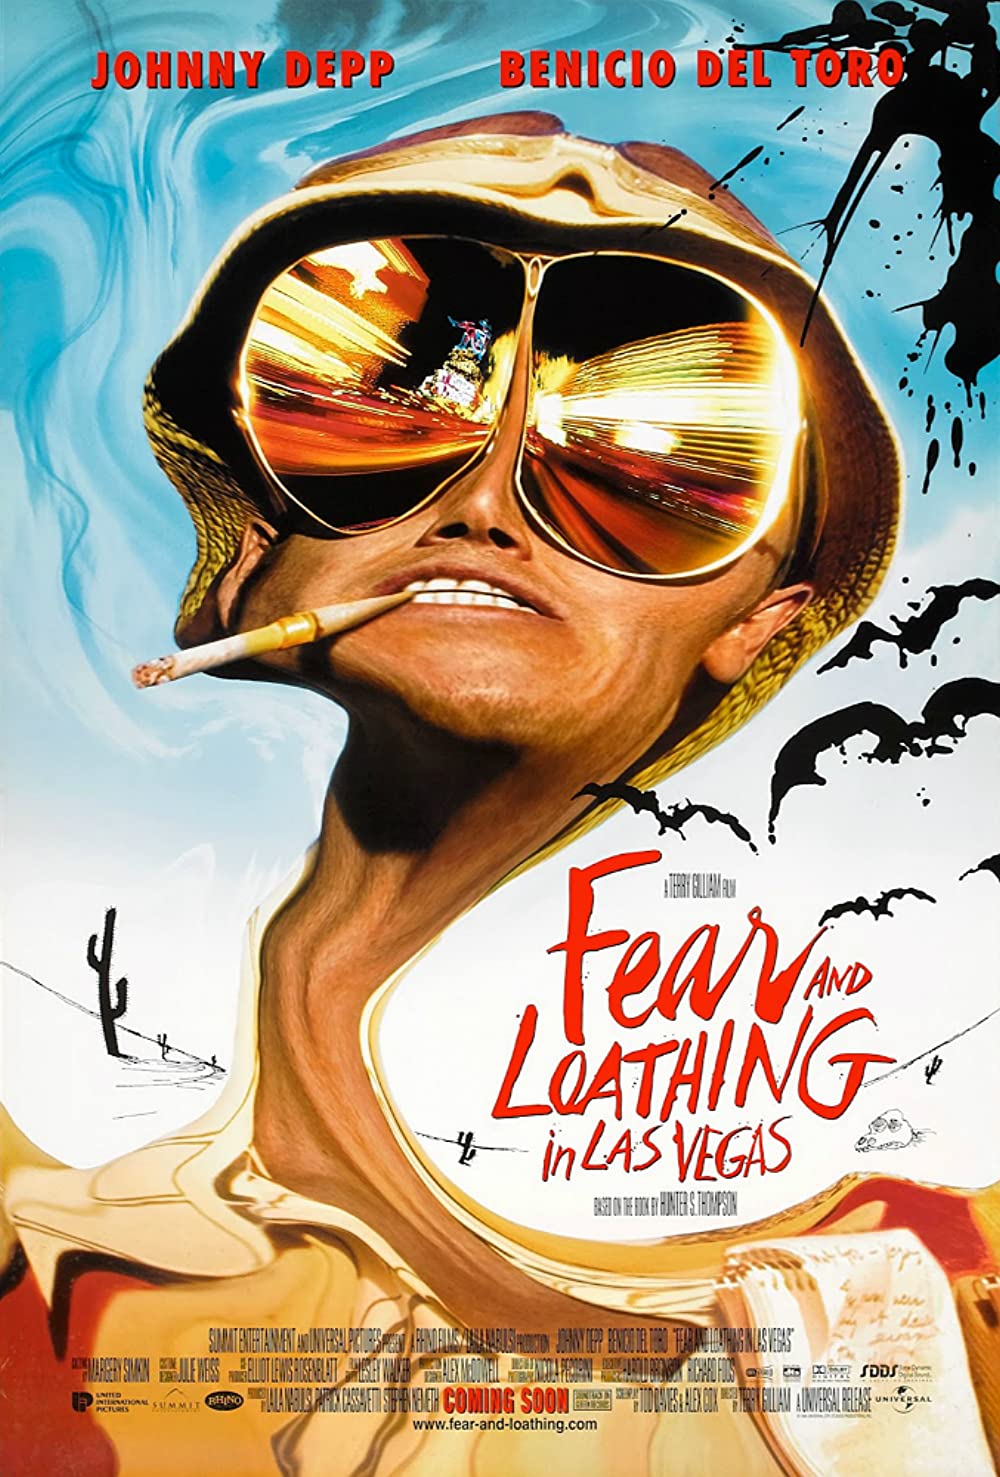 Filmbeschreibung zu Fear and Loathing in Las Vegas